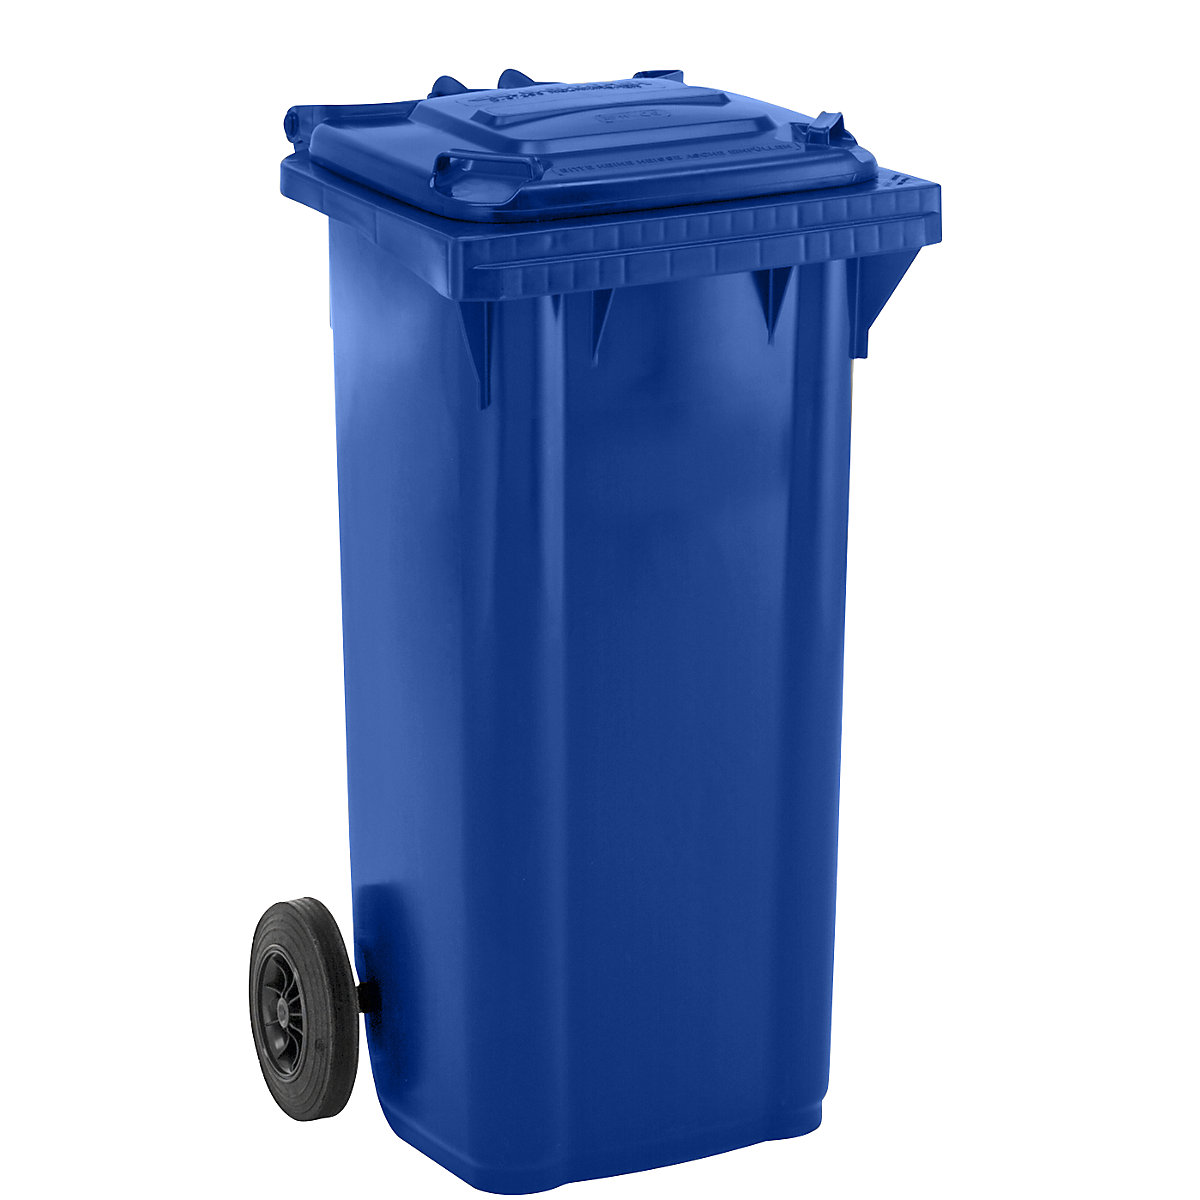 Contentor de lixo em plástico DIN EN 840 – eurokraft pro, volume 120 l, LxAxP 505 x 1005 x 555 mm, azul-7